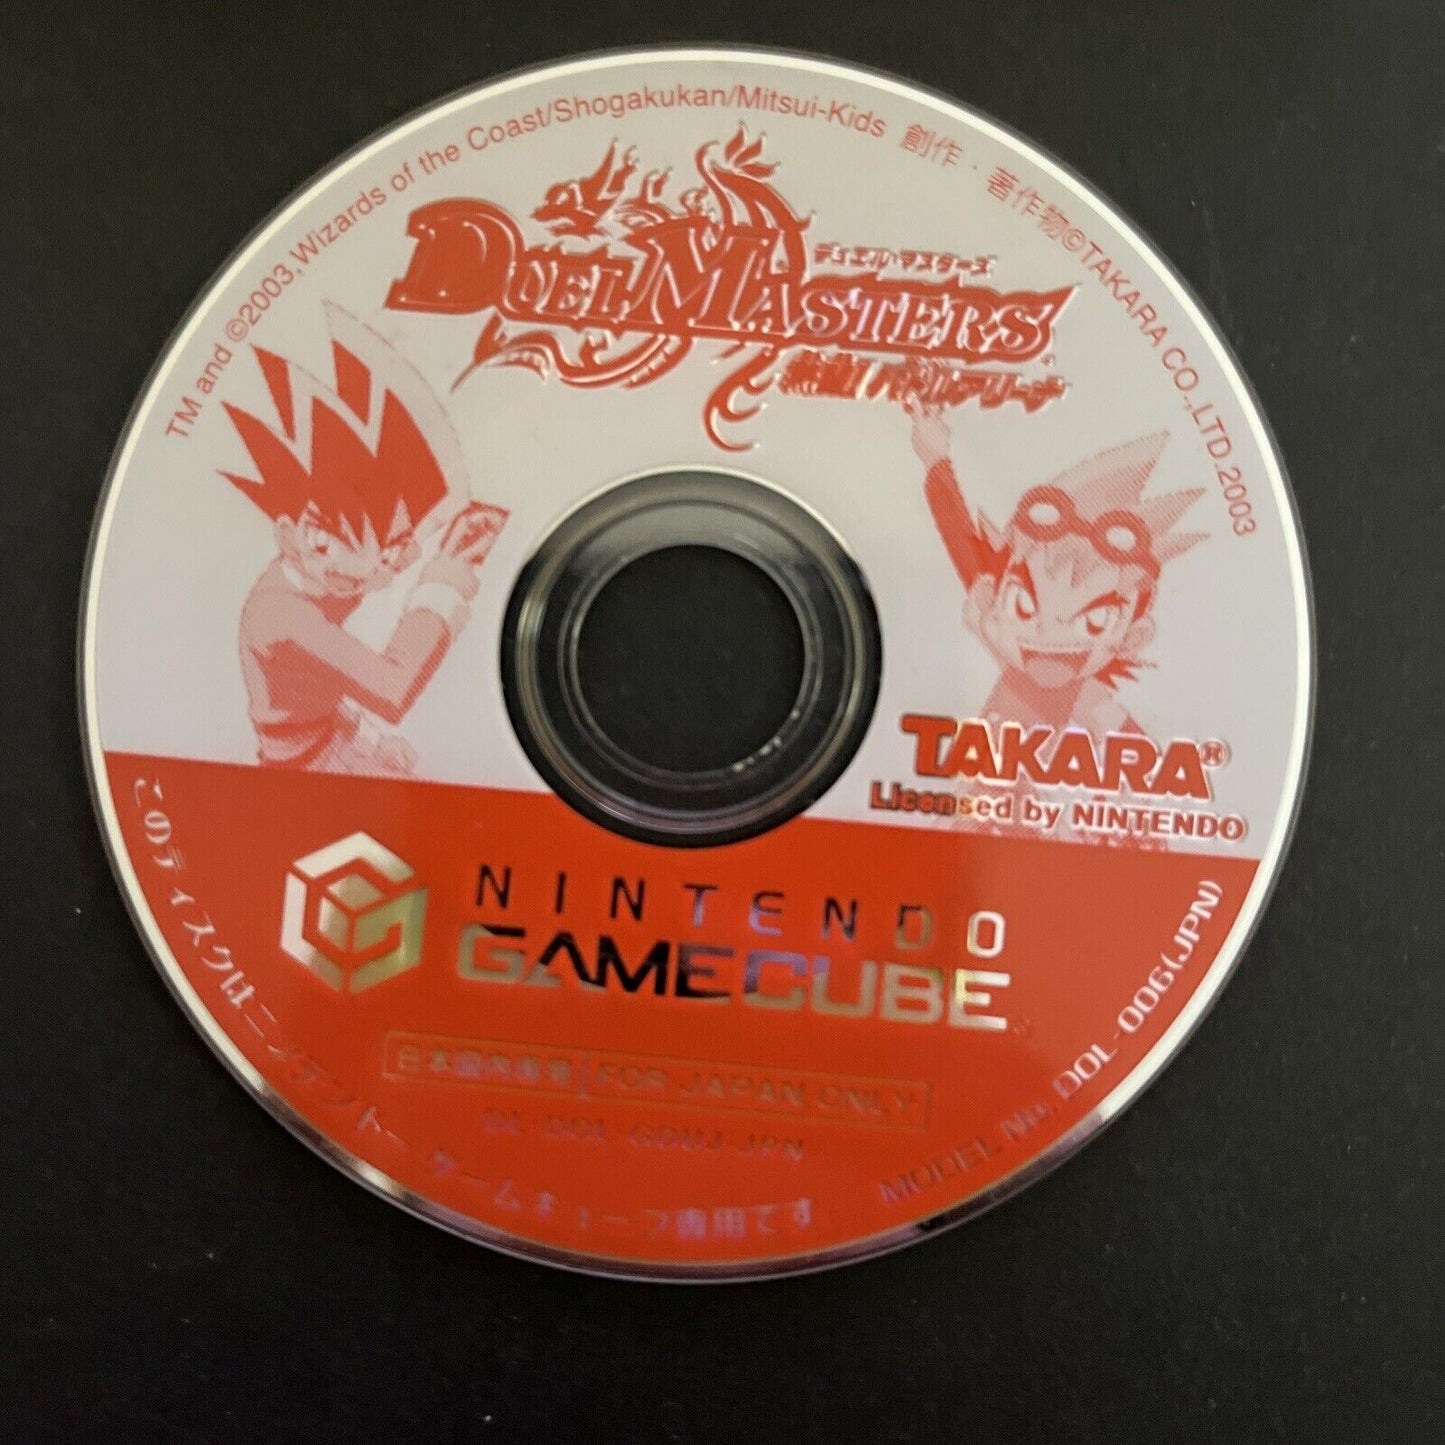 Duel Masters - Nintendo GameCube NTSC-J JAPAN Takara 2003 Game